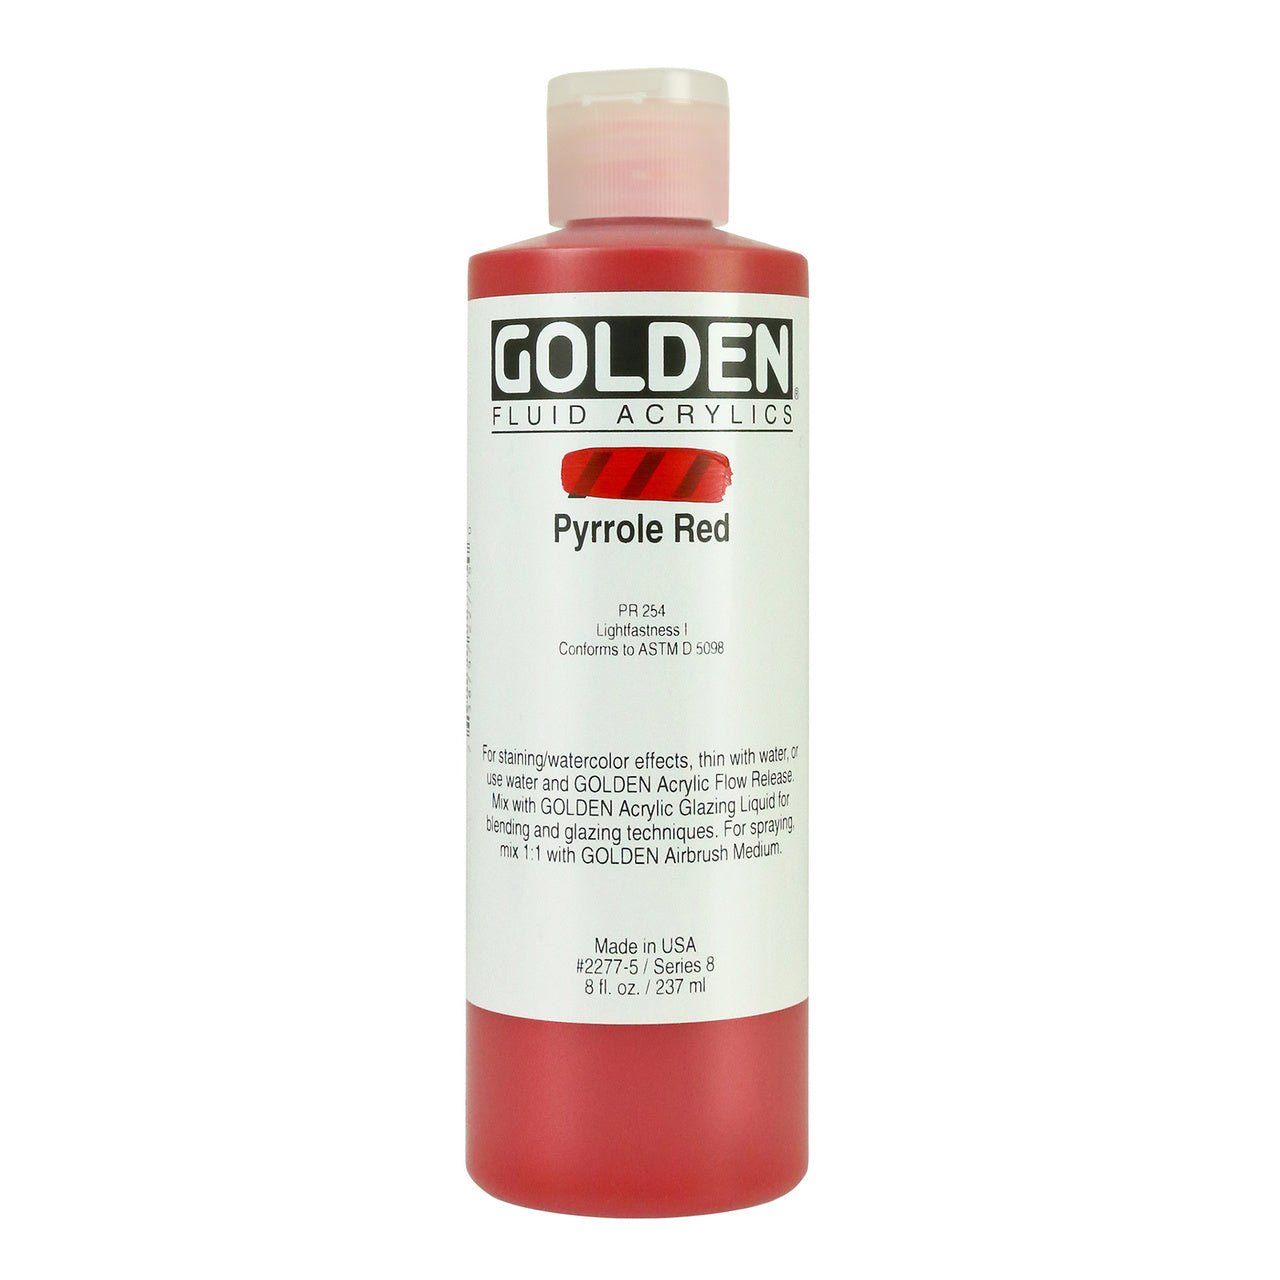 Golden Fluid Acrylic Pyrrole Red 8 oz - merriartist.com